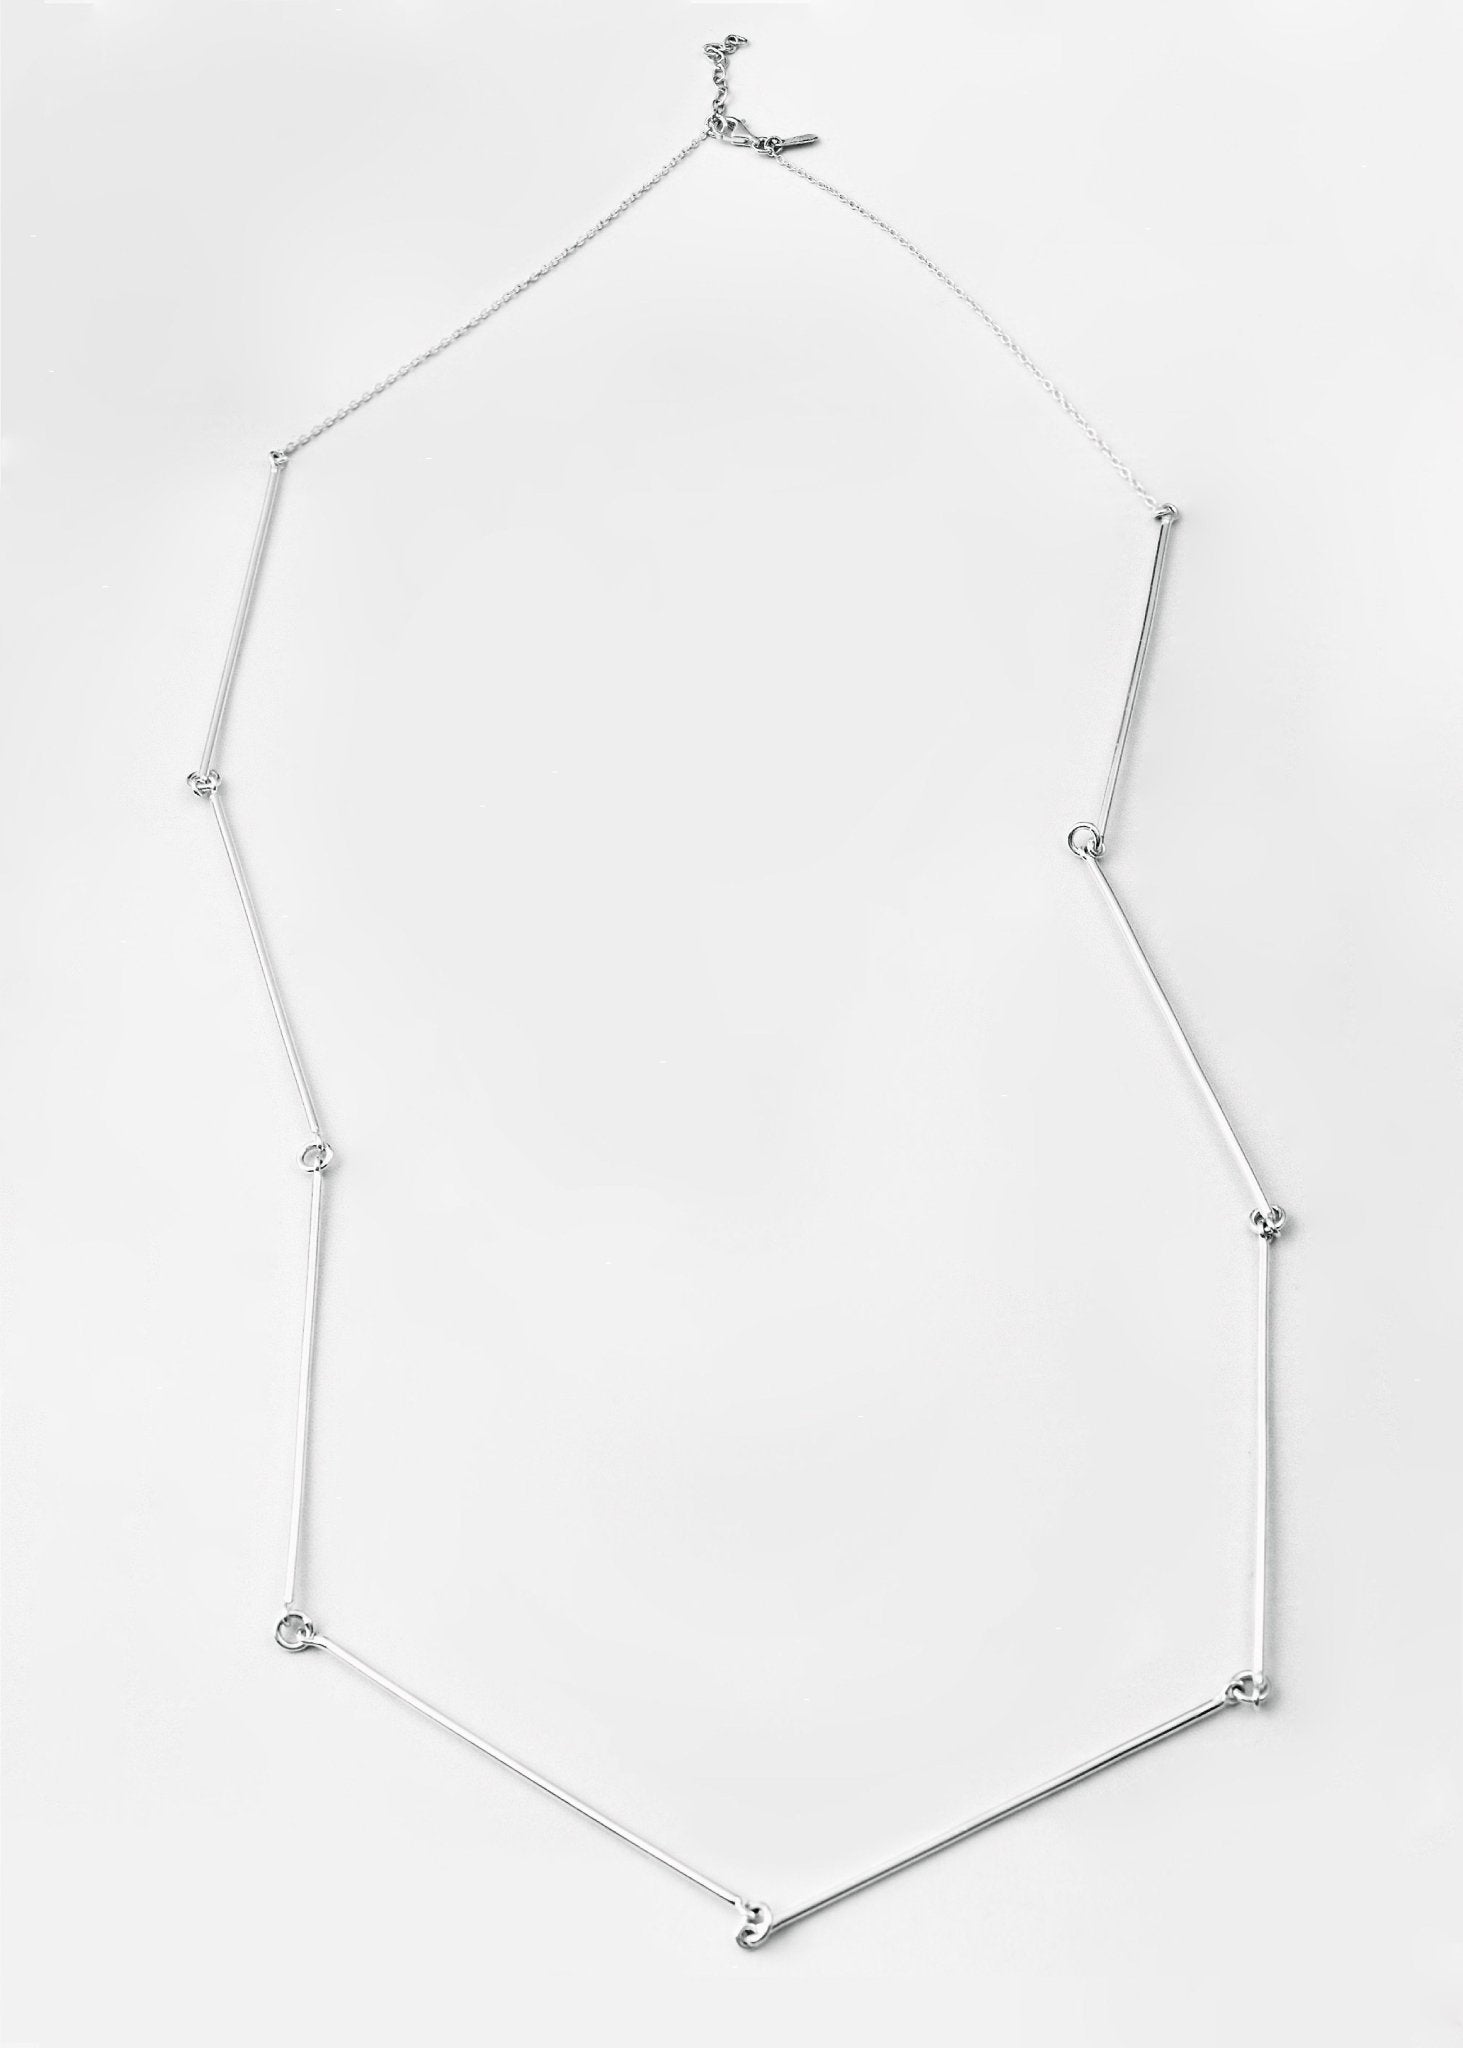 NEW! Chic, long, tubular linked necklace - Lai